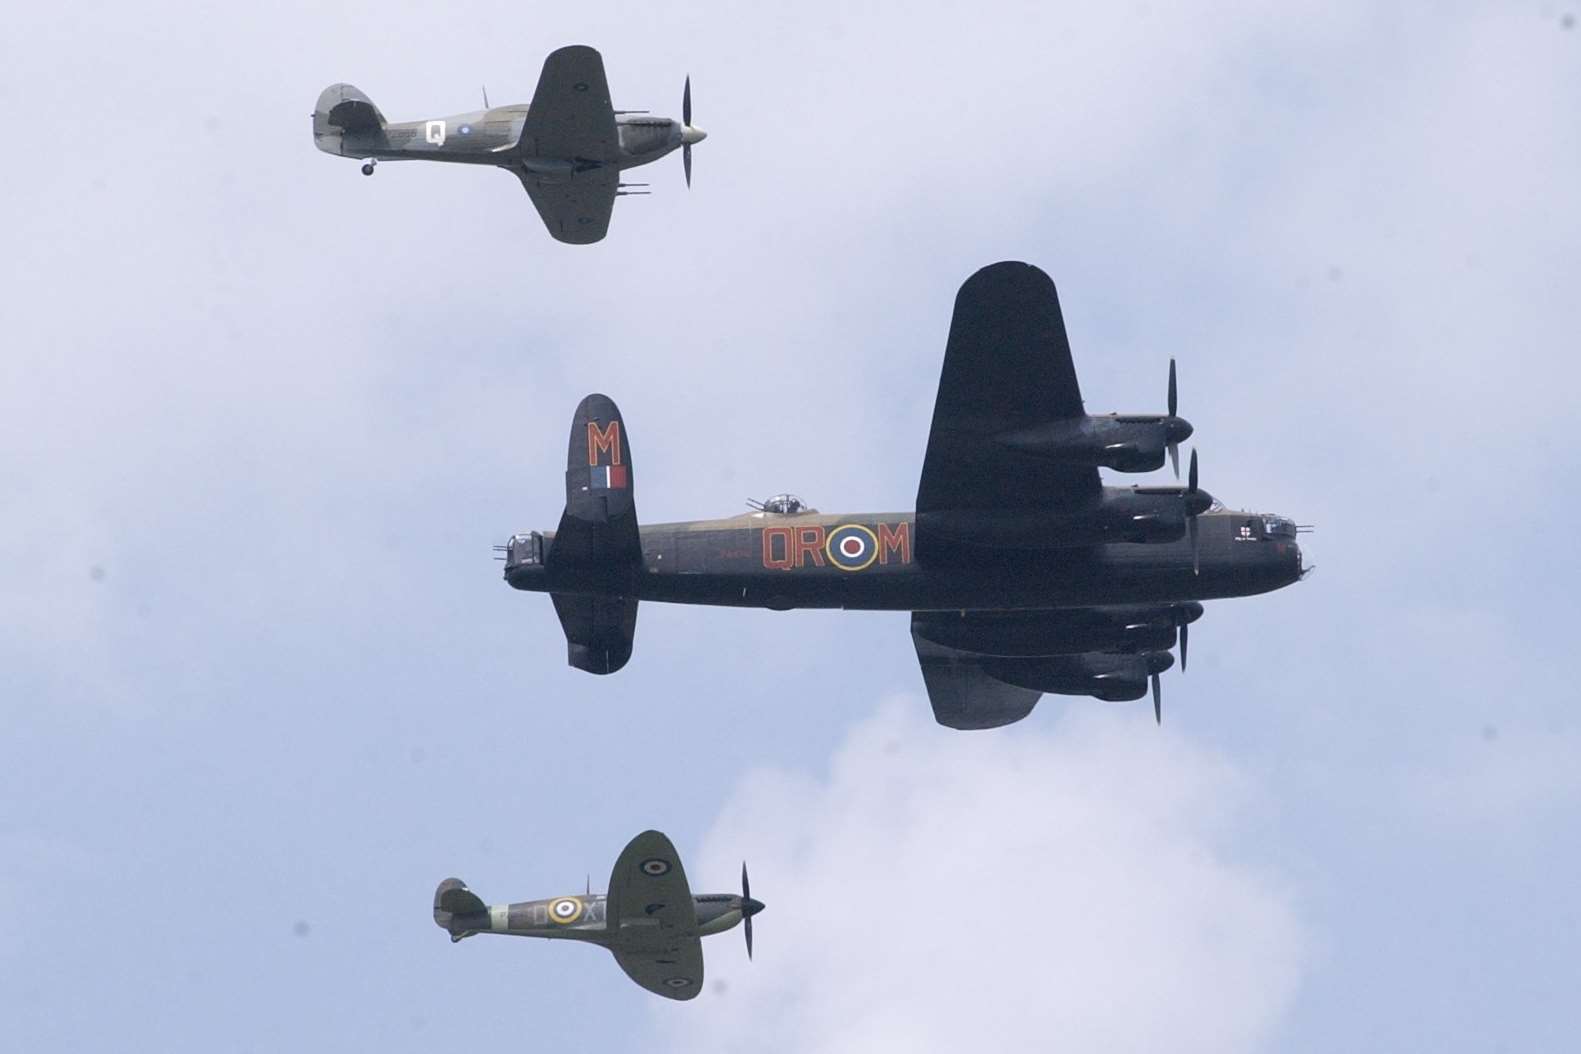 The Battle of Britain memorial flight